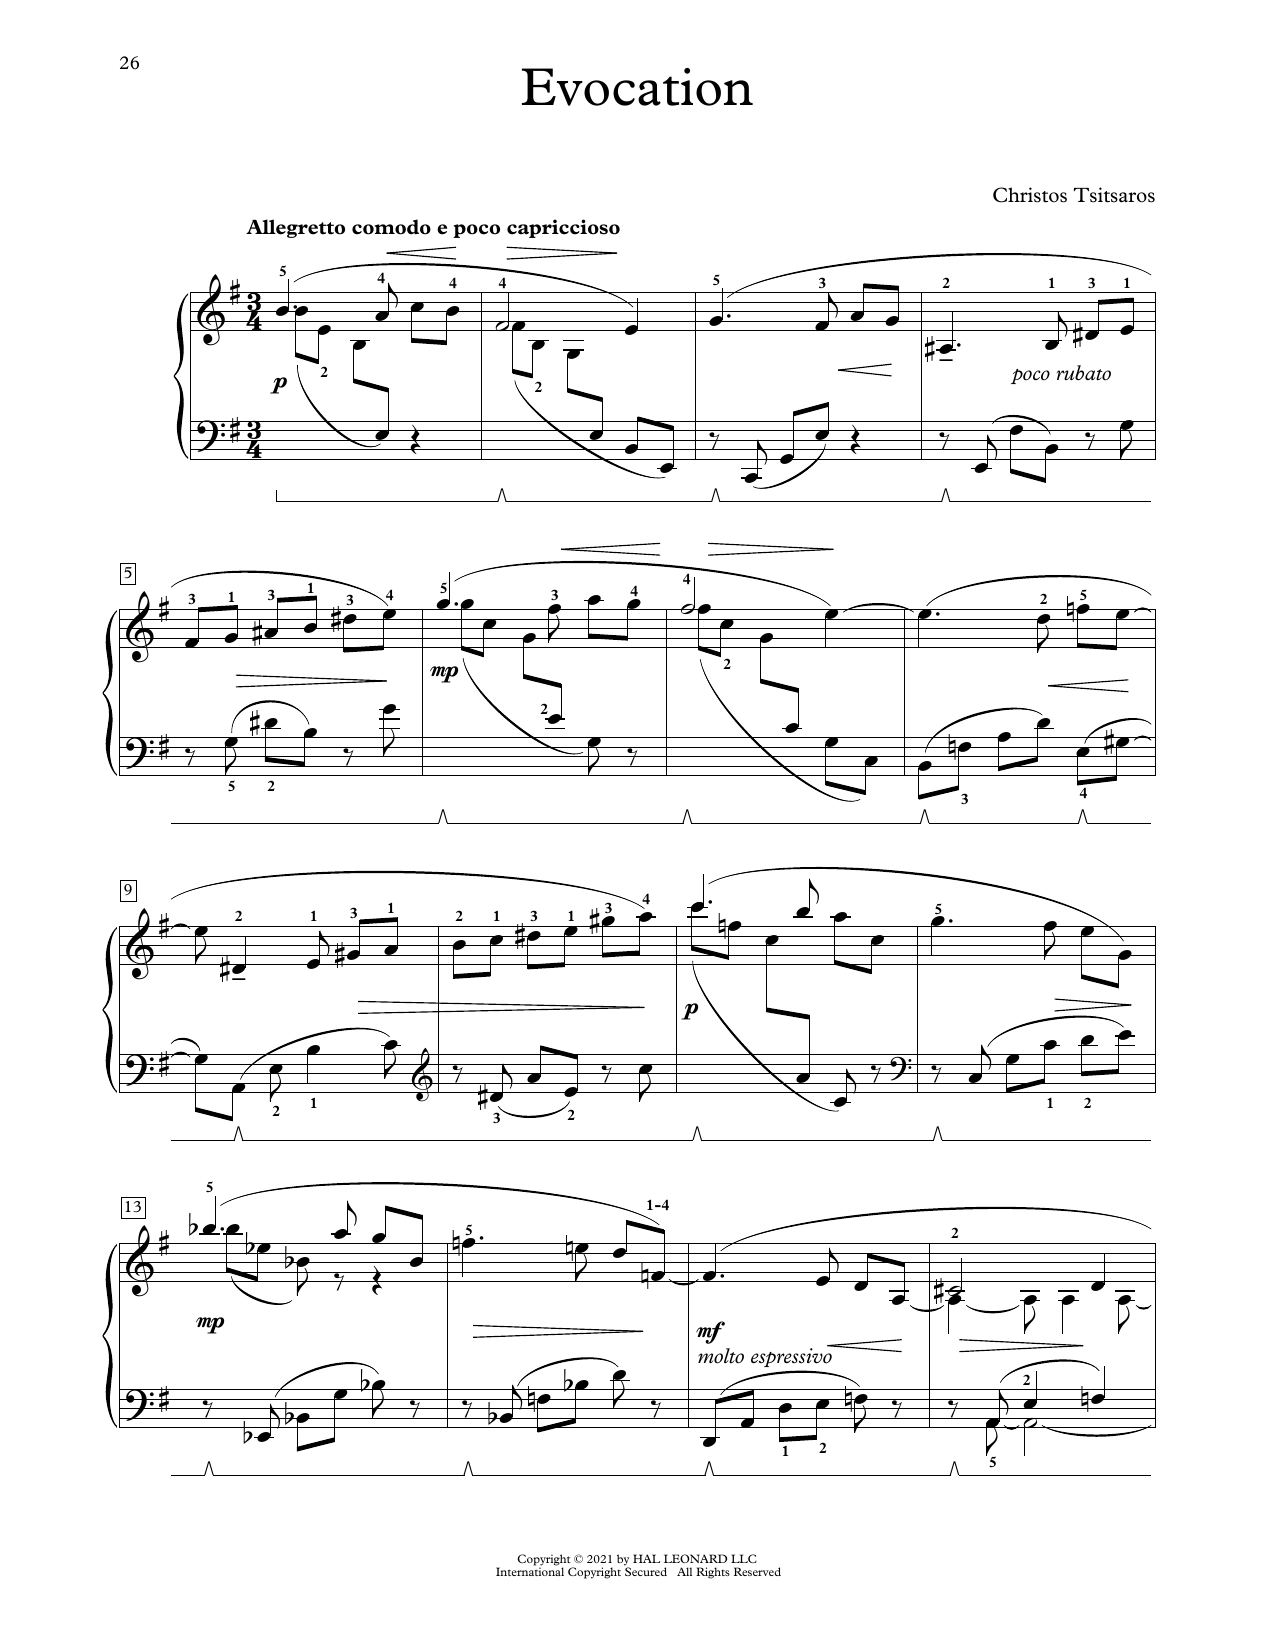 Christos Tsitsaros Evocation Sheet Music Notes & Chords for Educational Piano - Download or Print PDF